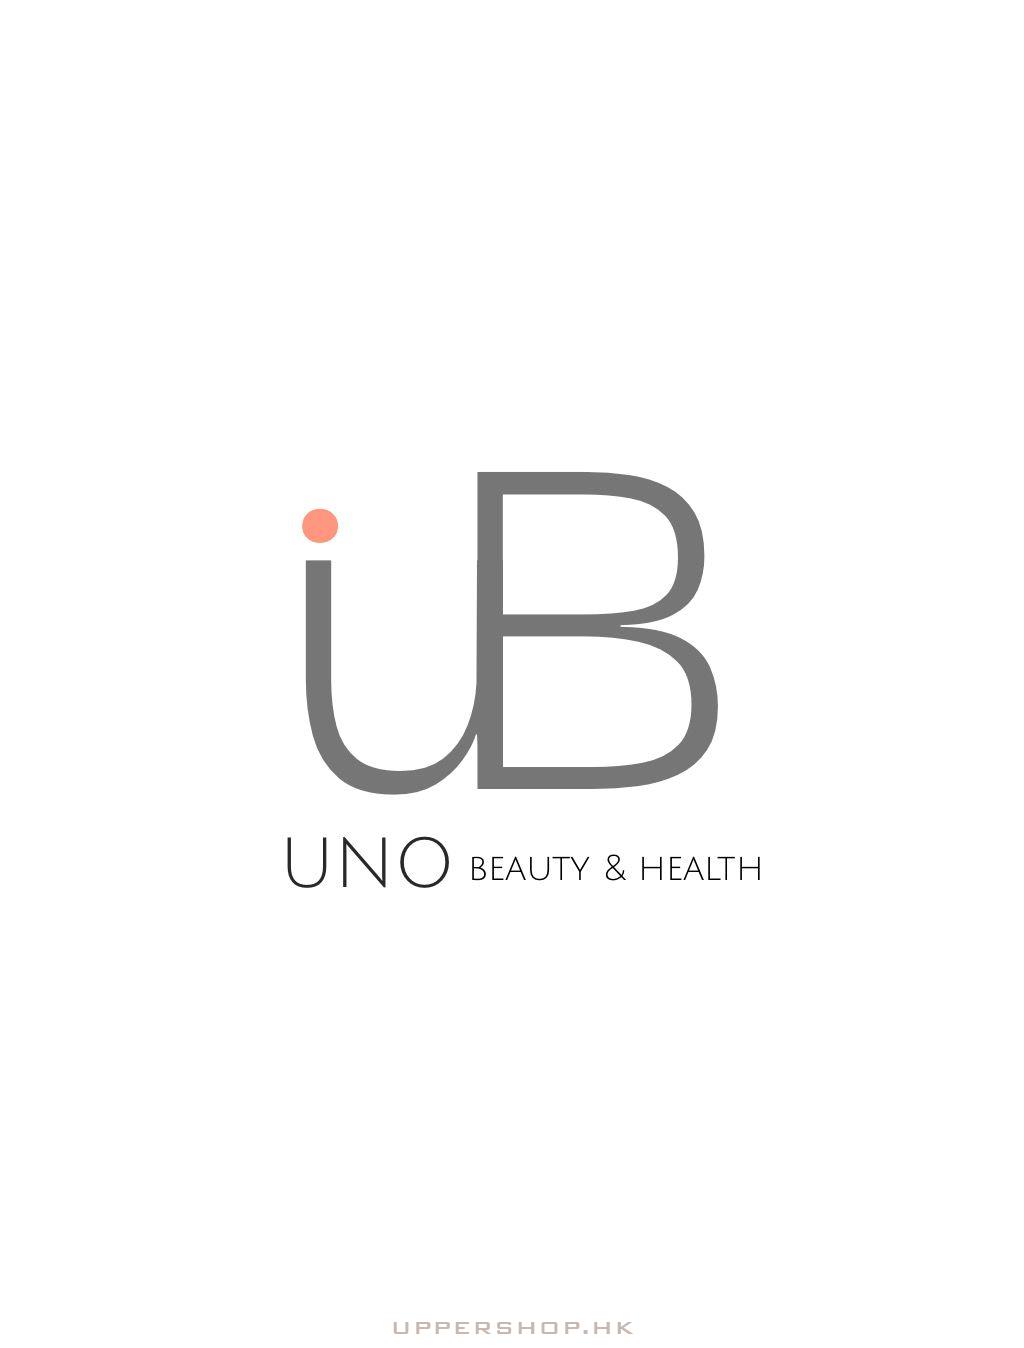 Uno Beauty & Health